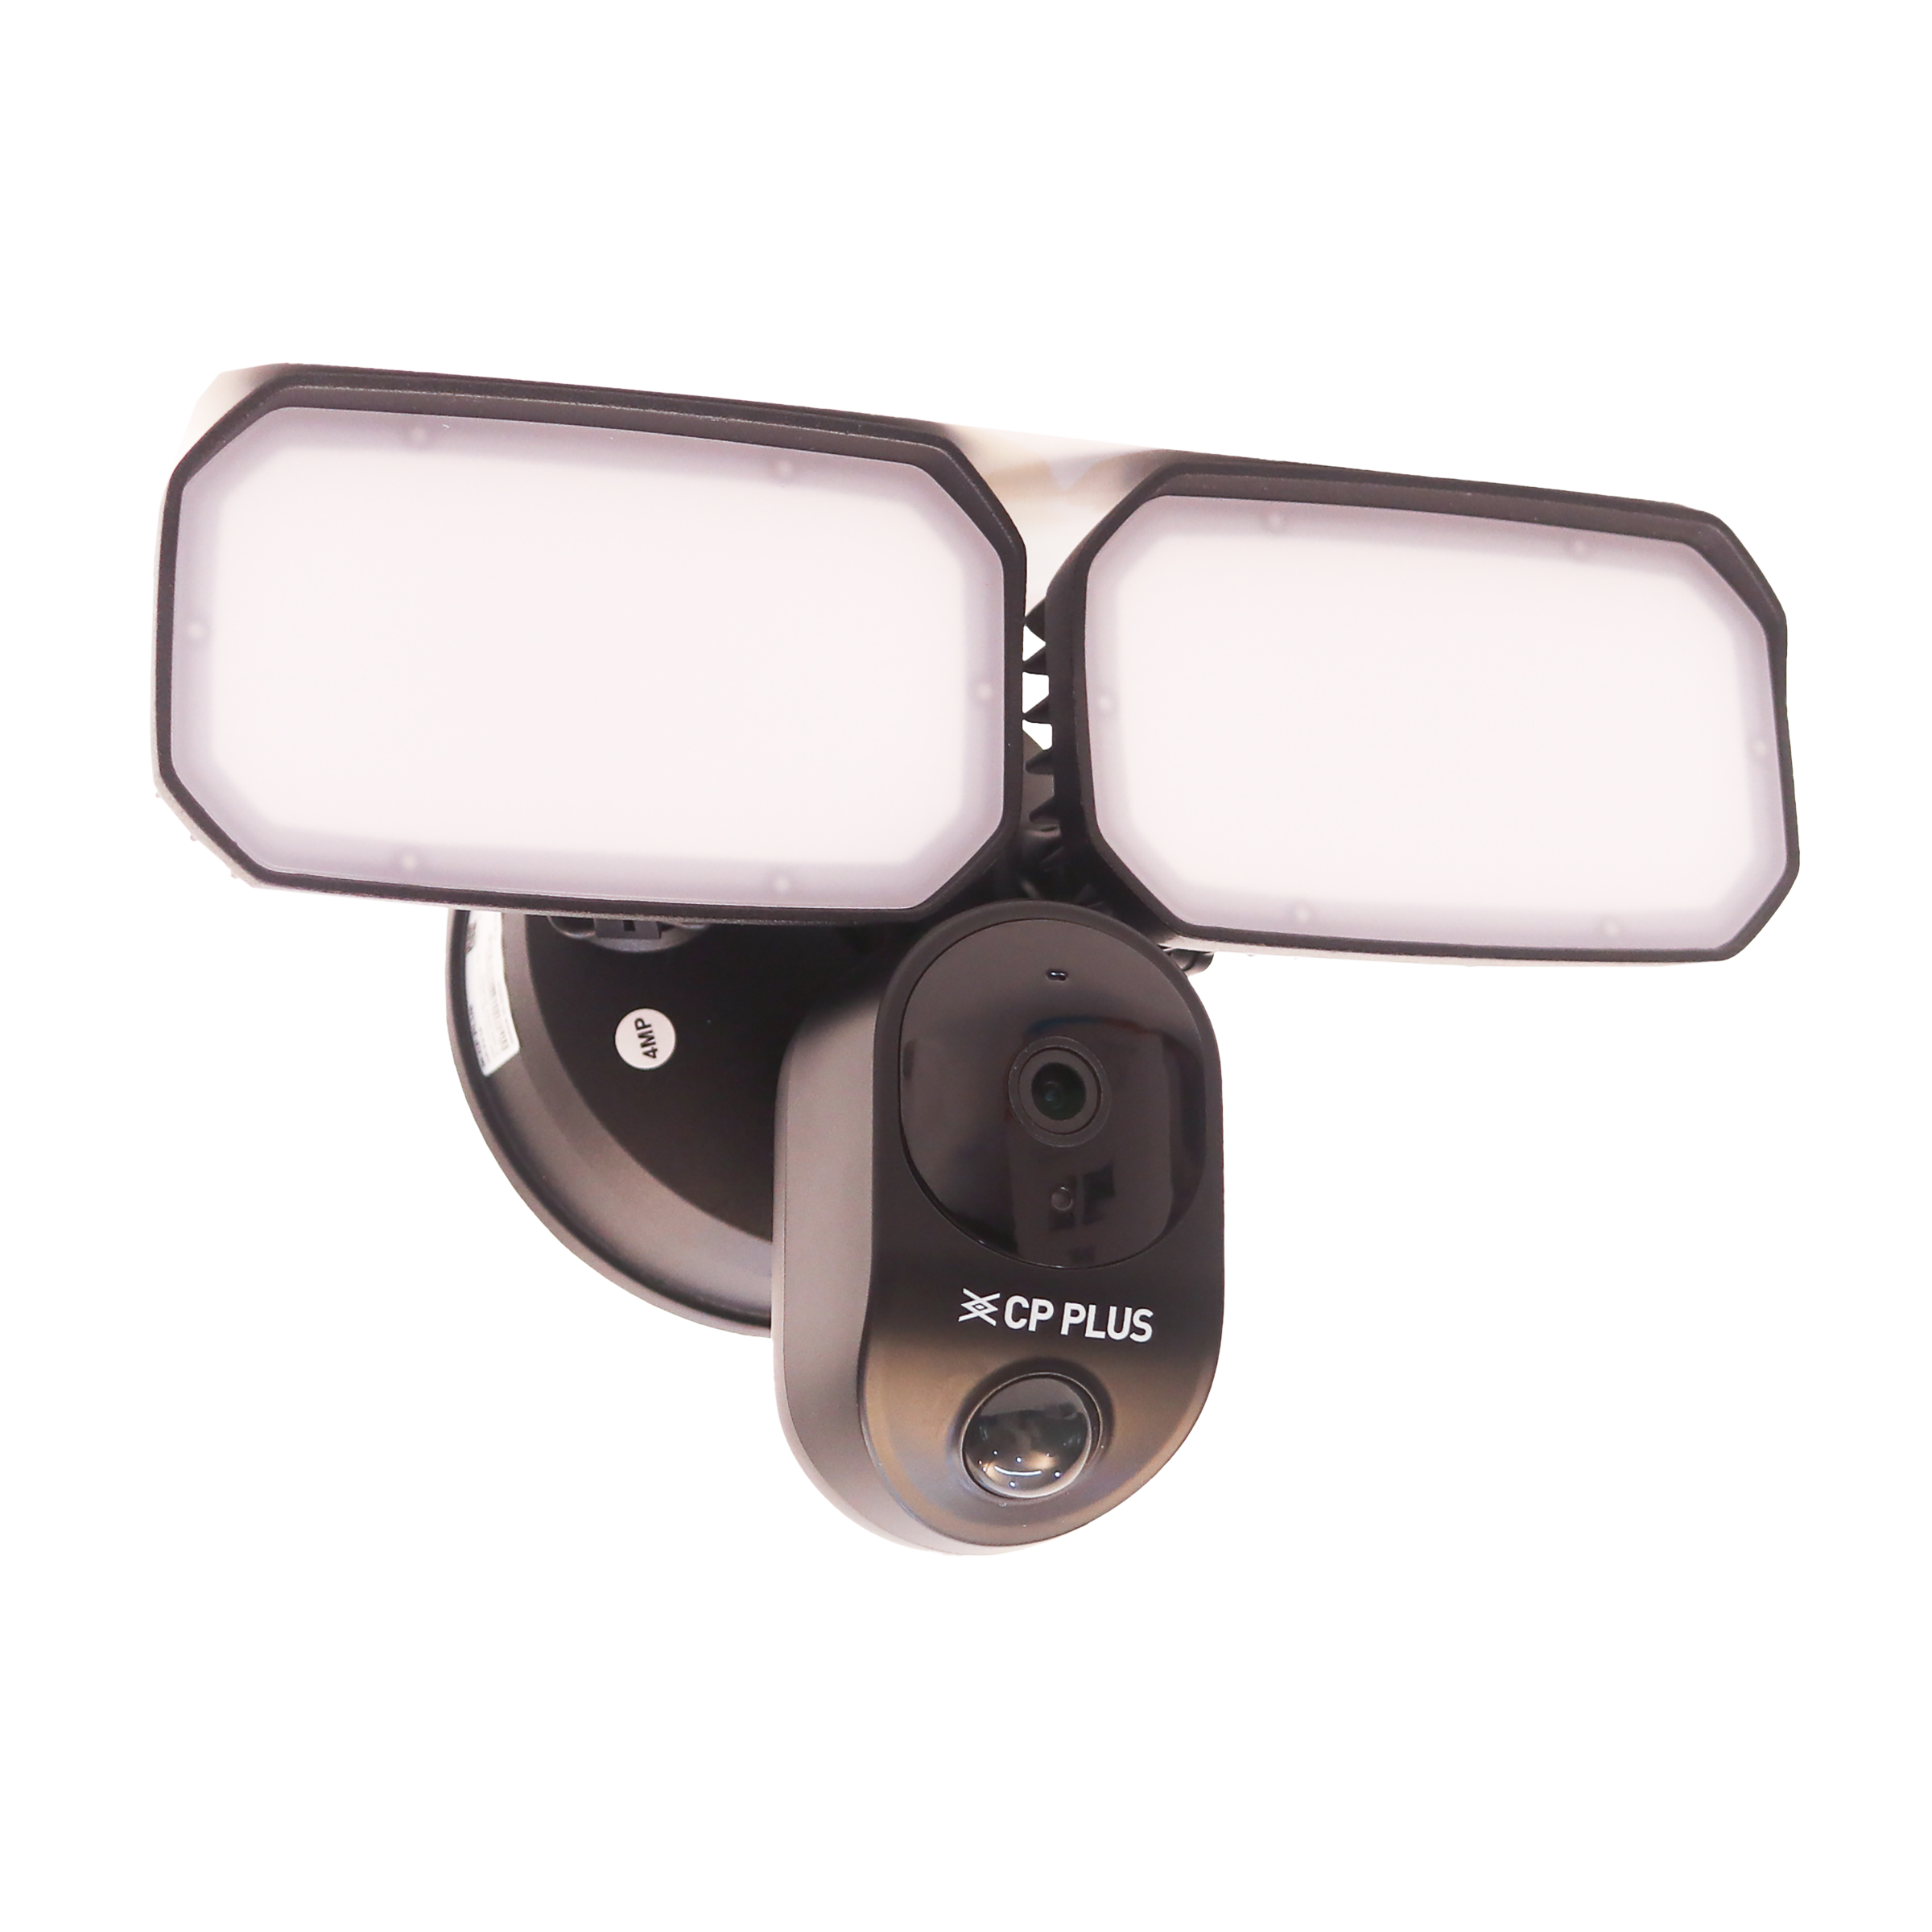 CP PLUS Ezykam WiFi CCTV Security Camera (IP65 Weatherproof, CP-F41A, Black)